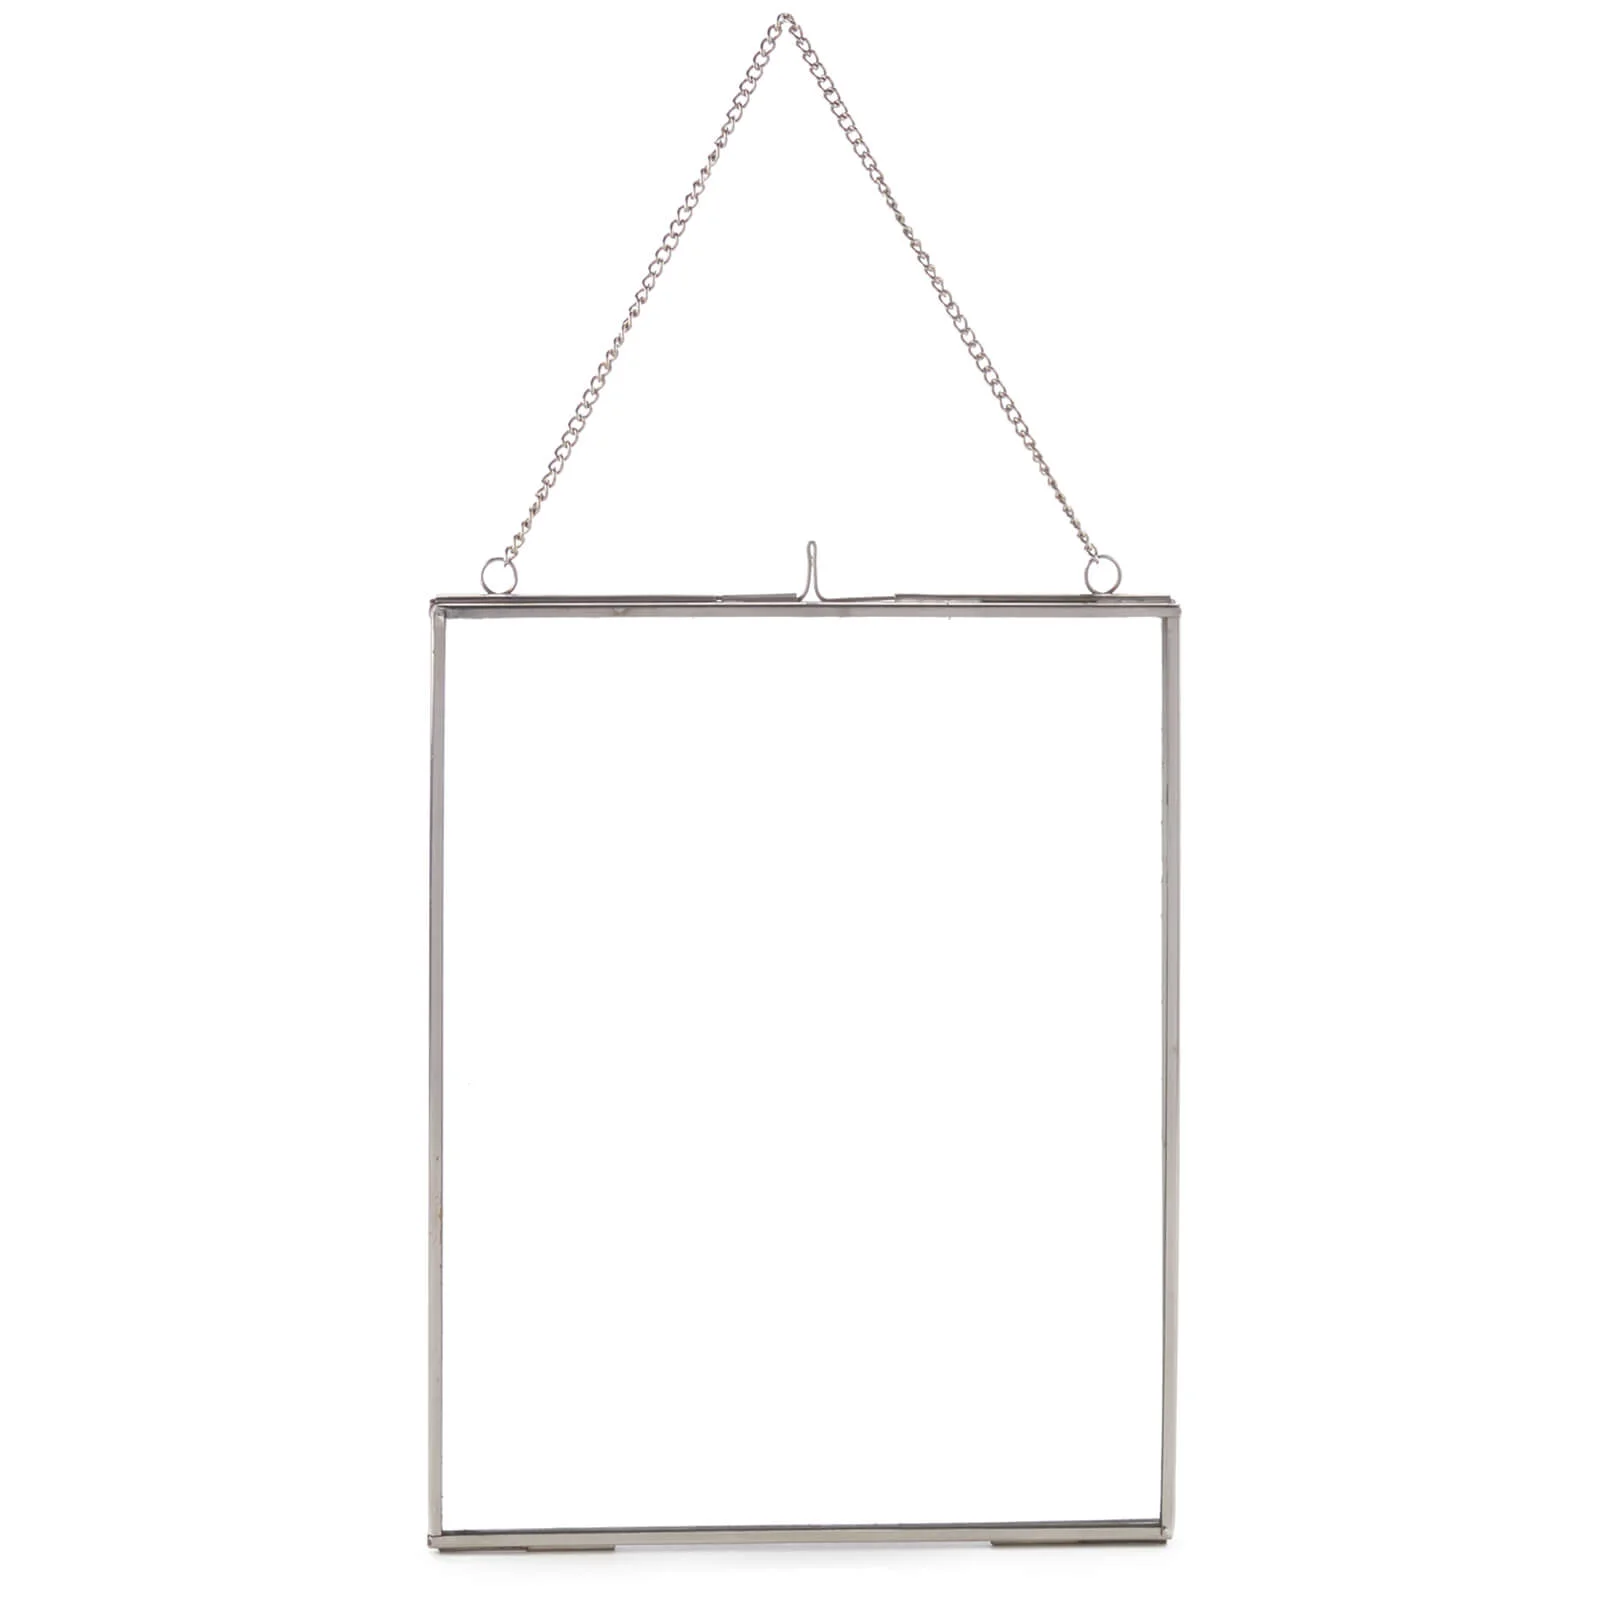 Nkuku Kiko Glass Frame - Silver - Portrait 8 x 10 Inch (20 x 25cm) Image 1